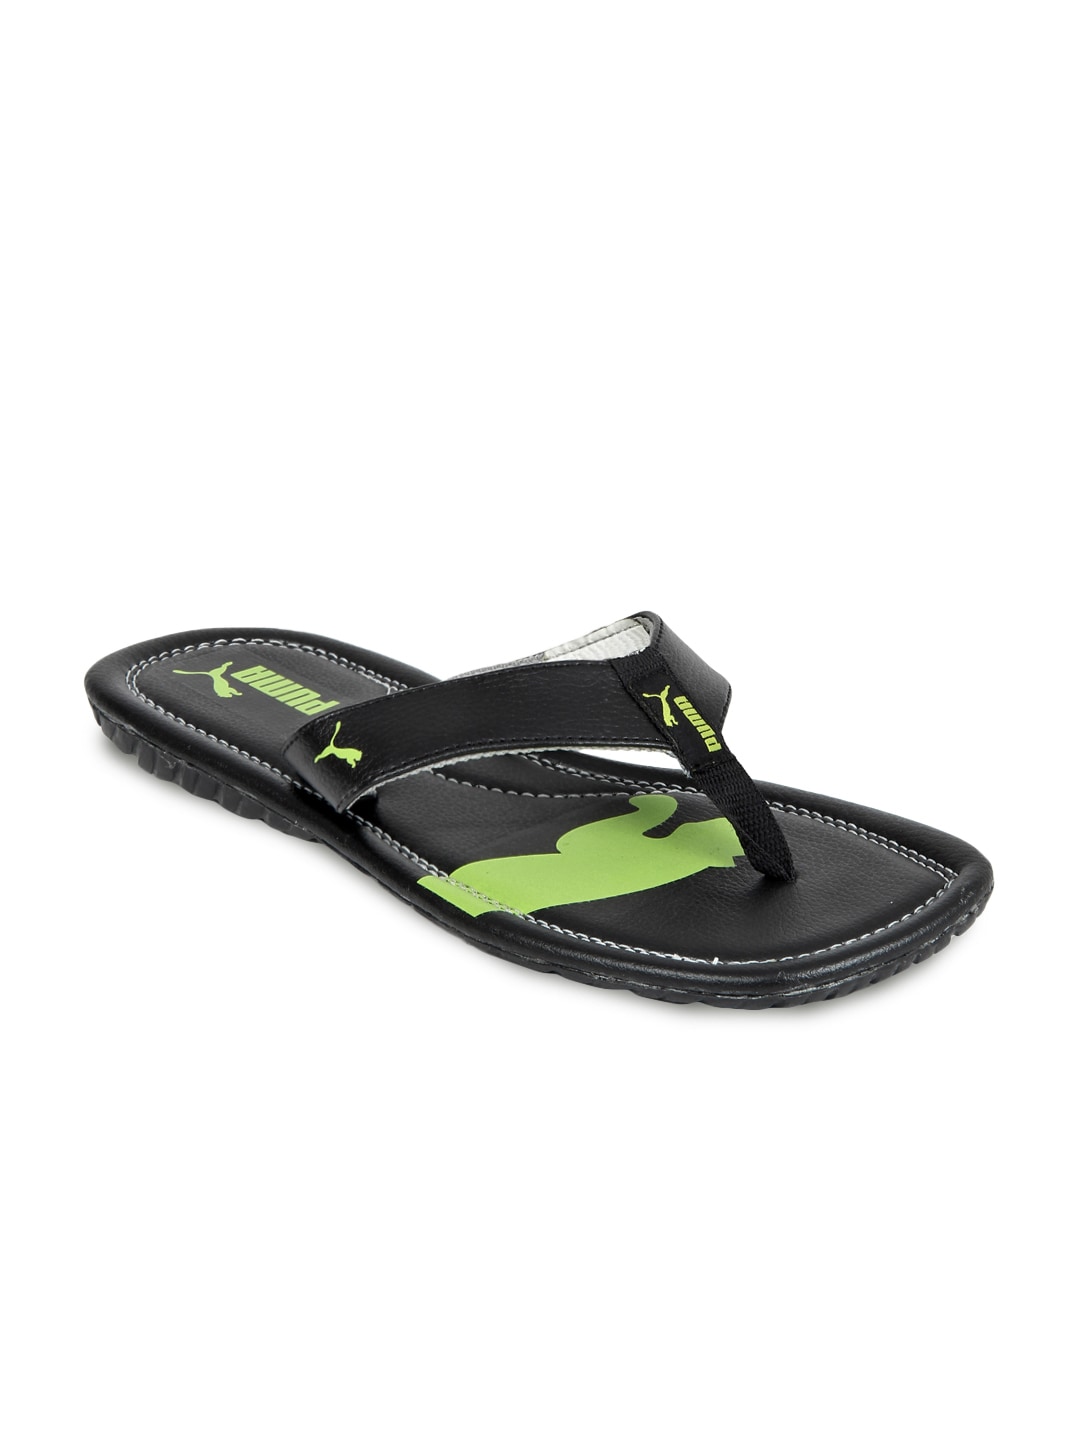 buy puma sandals at lowest price